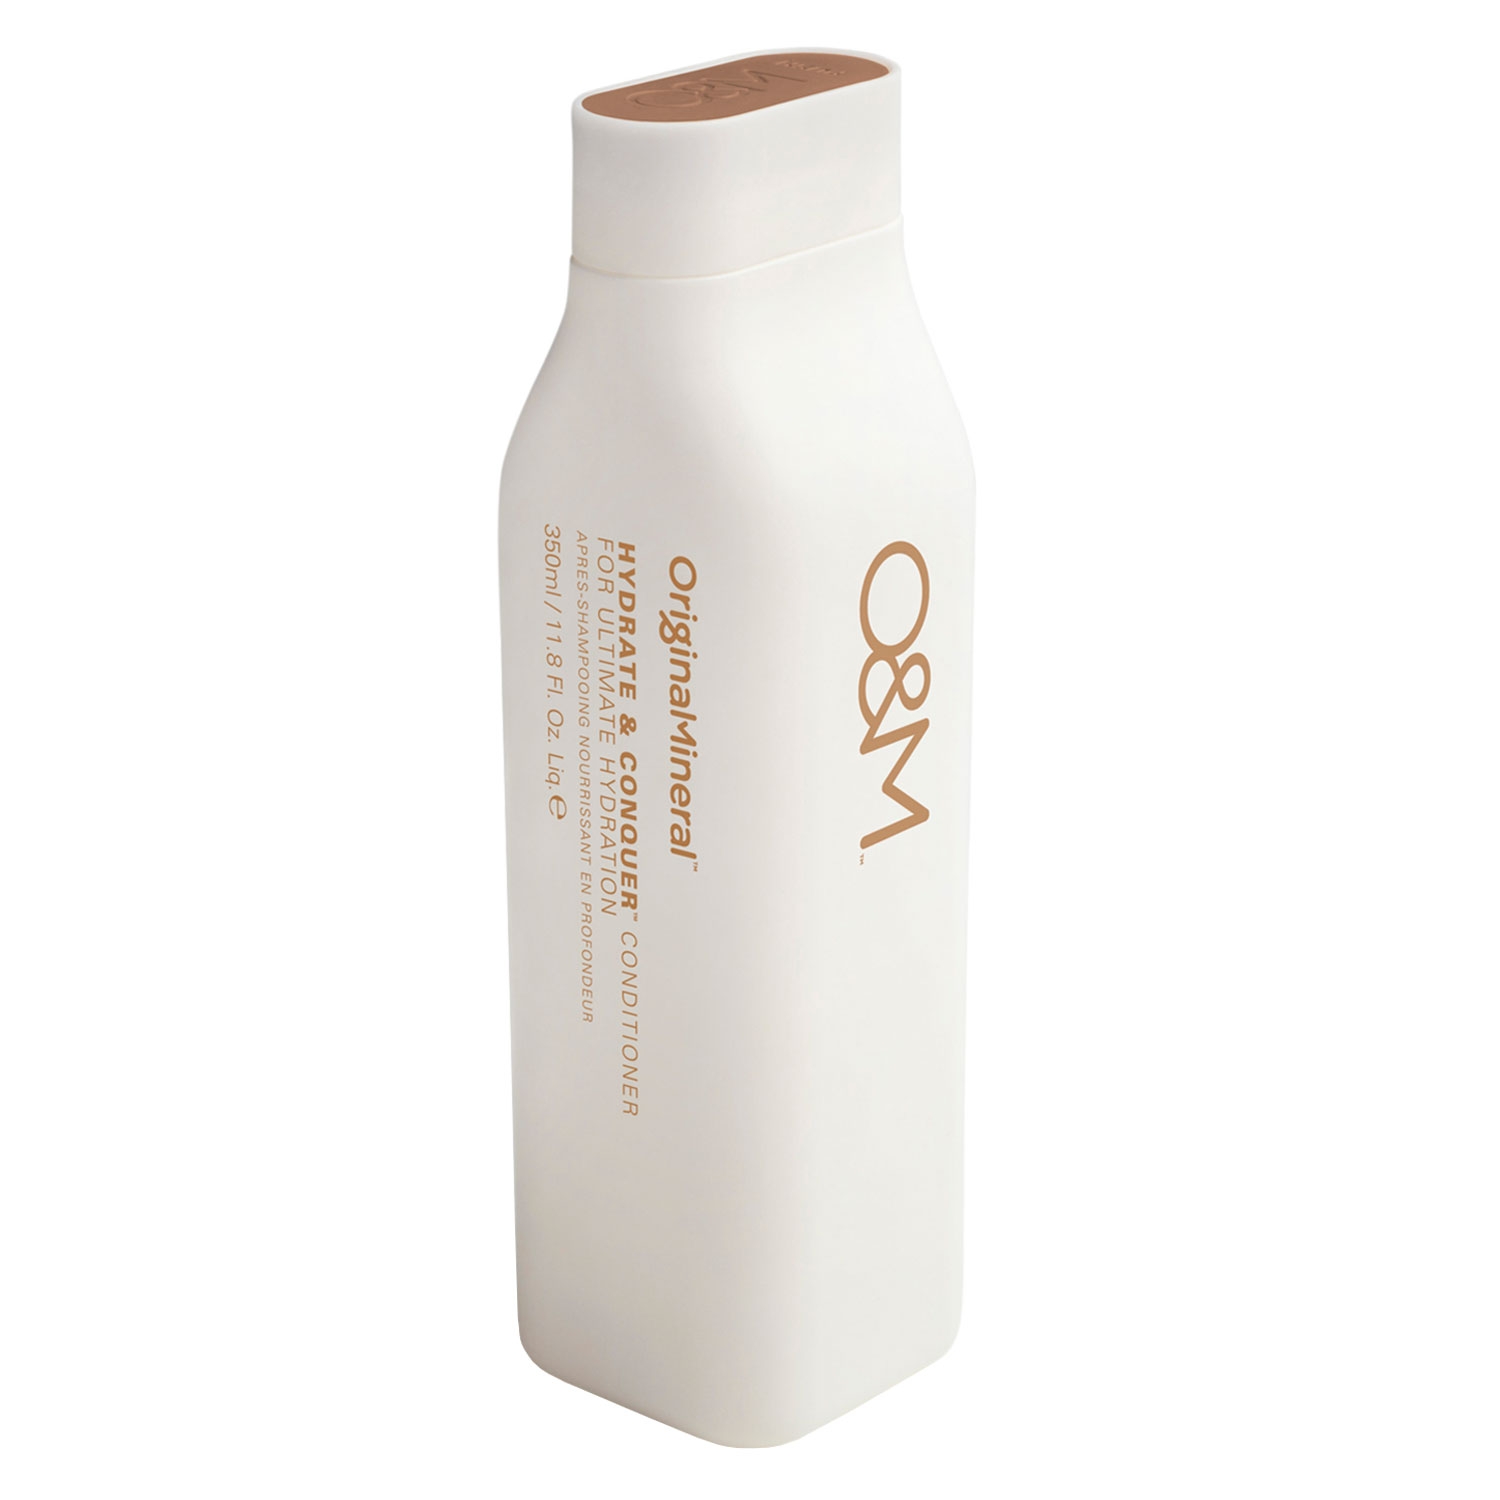 Produktbild von O&M Haircare - Hydrate & Conquer Conditioner